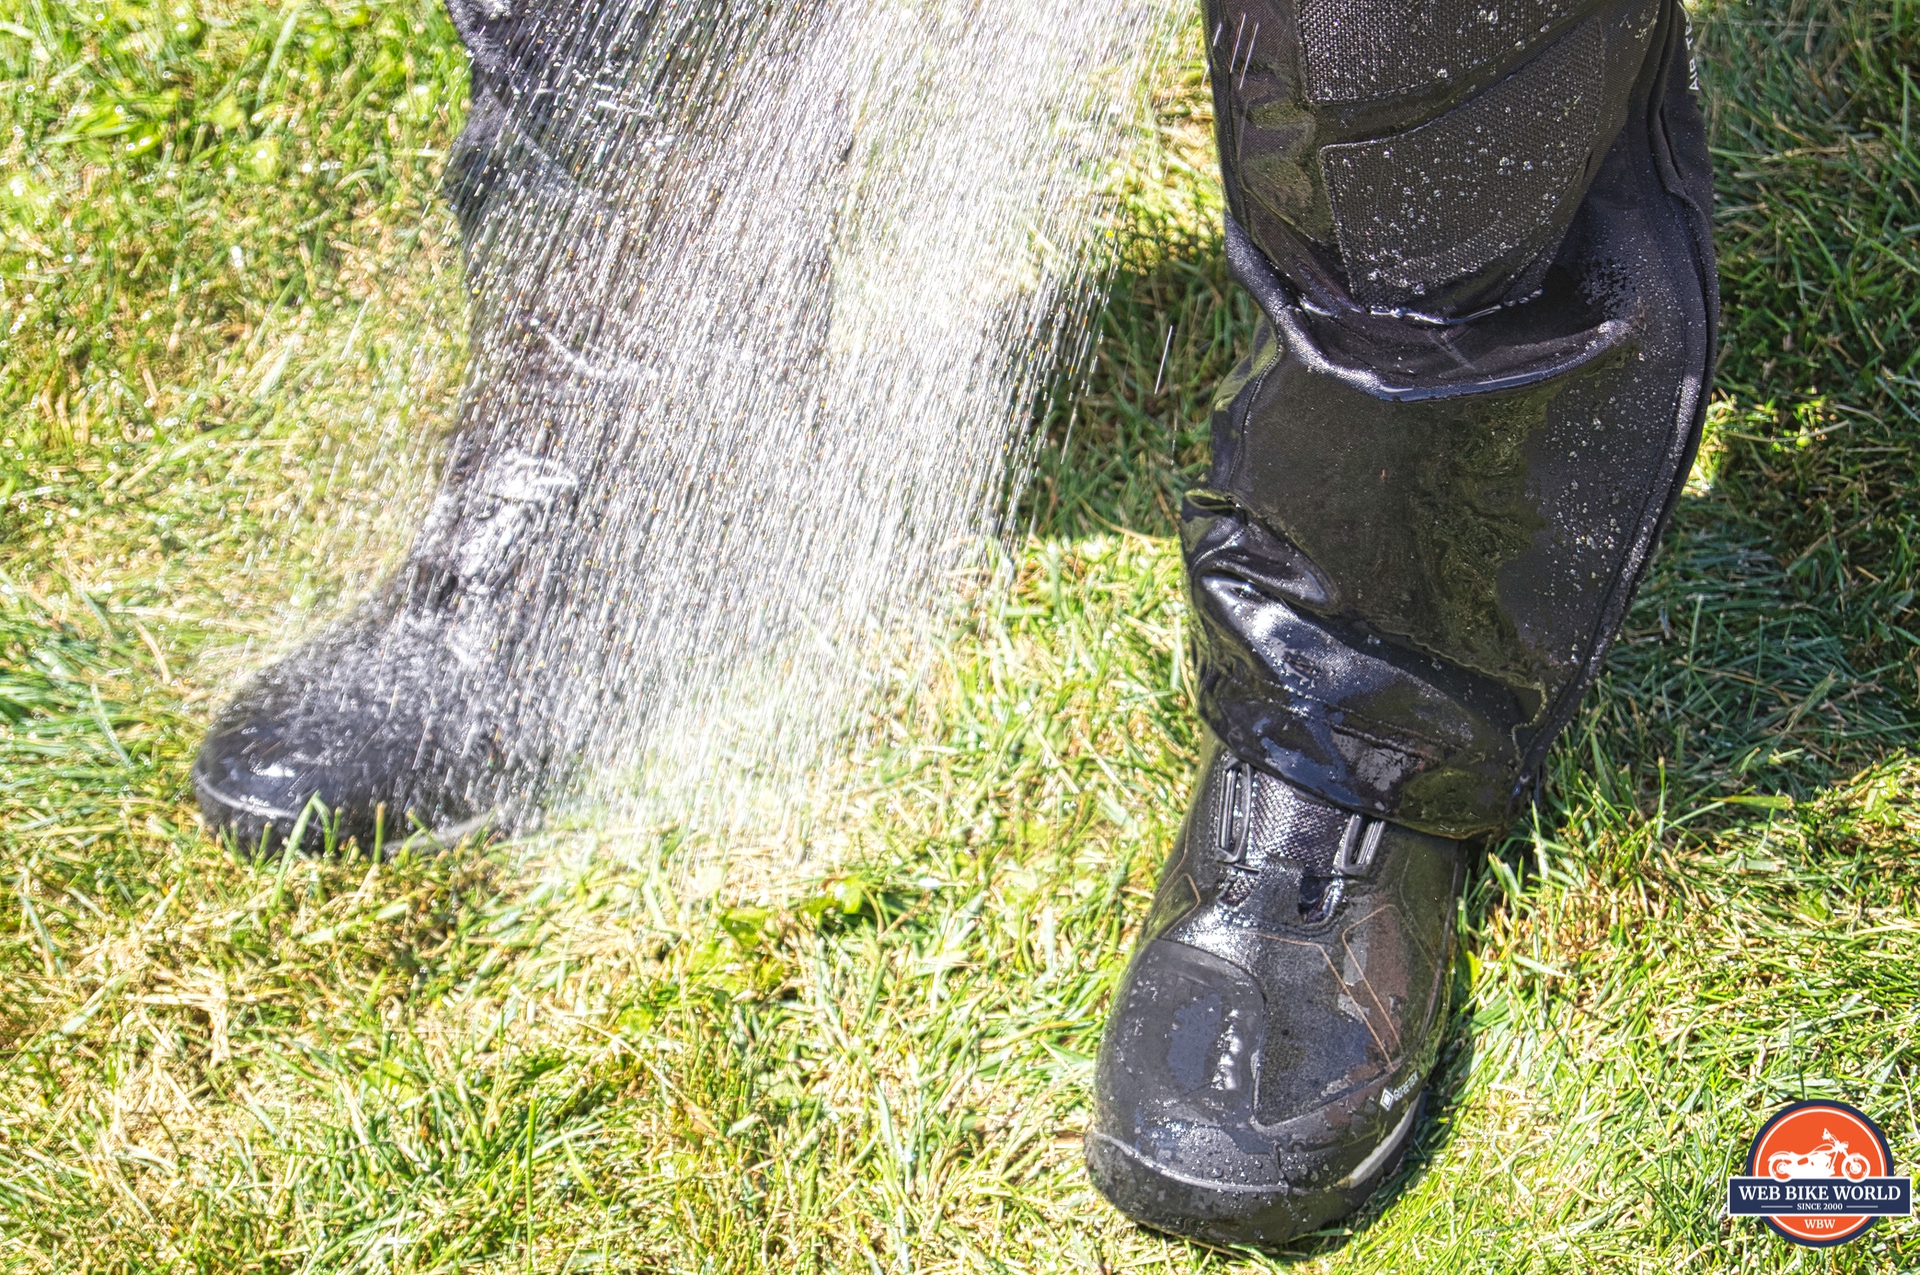 Water from garden hose being sprayed on REV'IT Pioneer GTX Boots